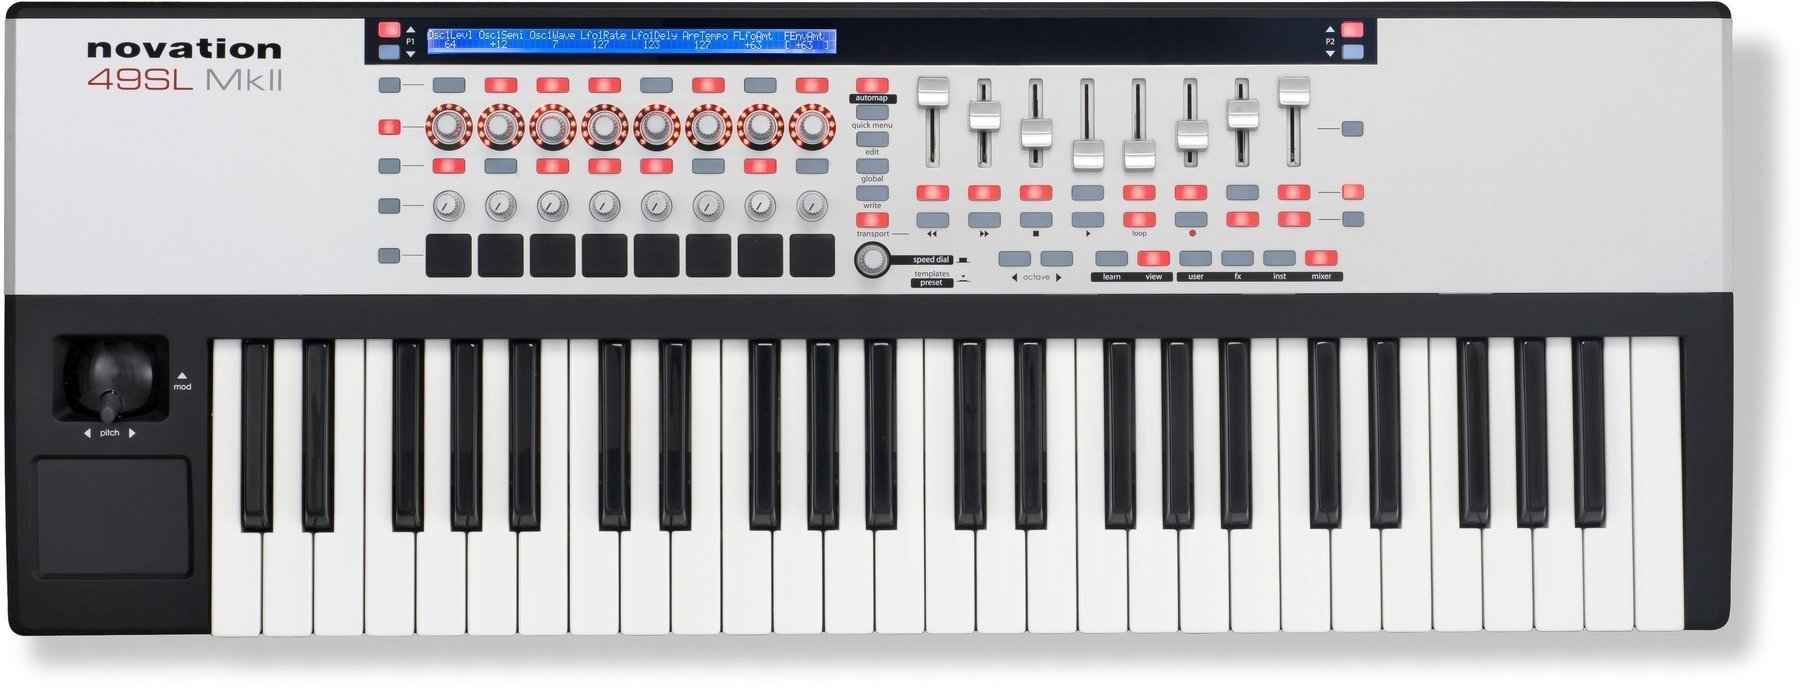 MIDI-Keyboard Novation Remote 49 SL MKII